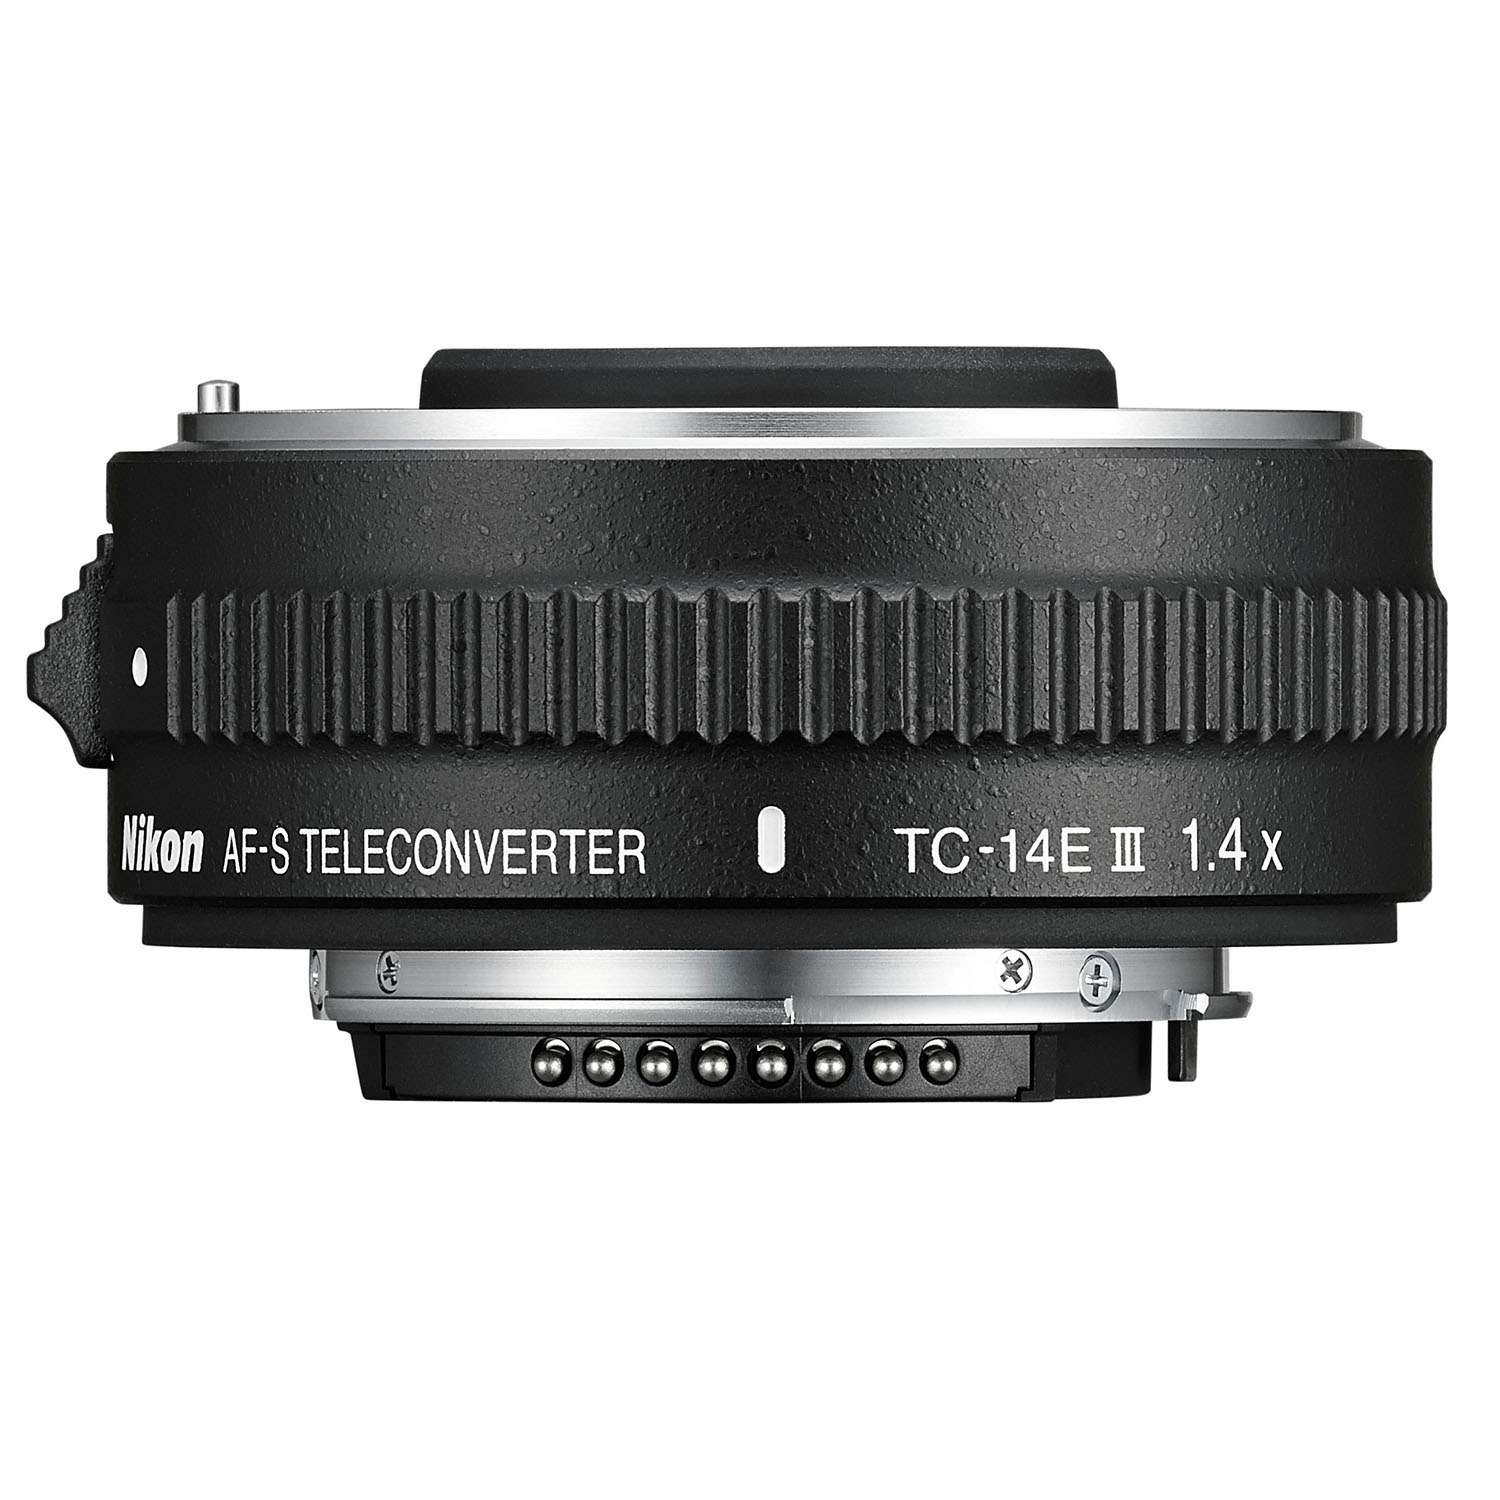 Nikon TC-14E III Teleconverter